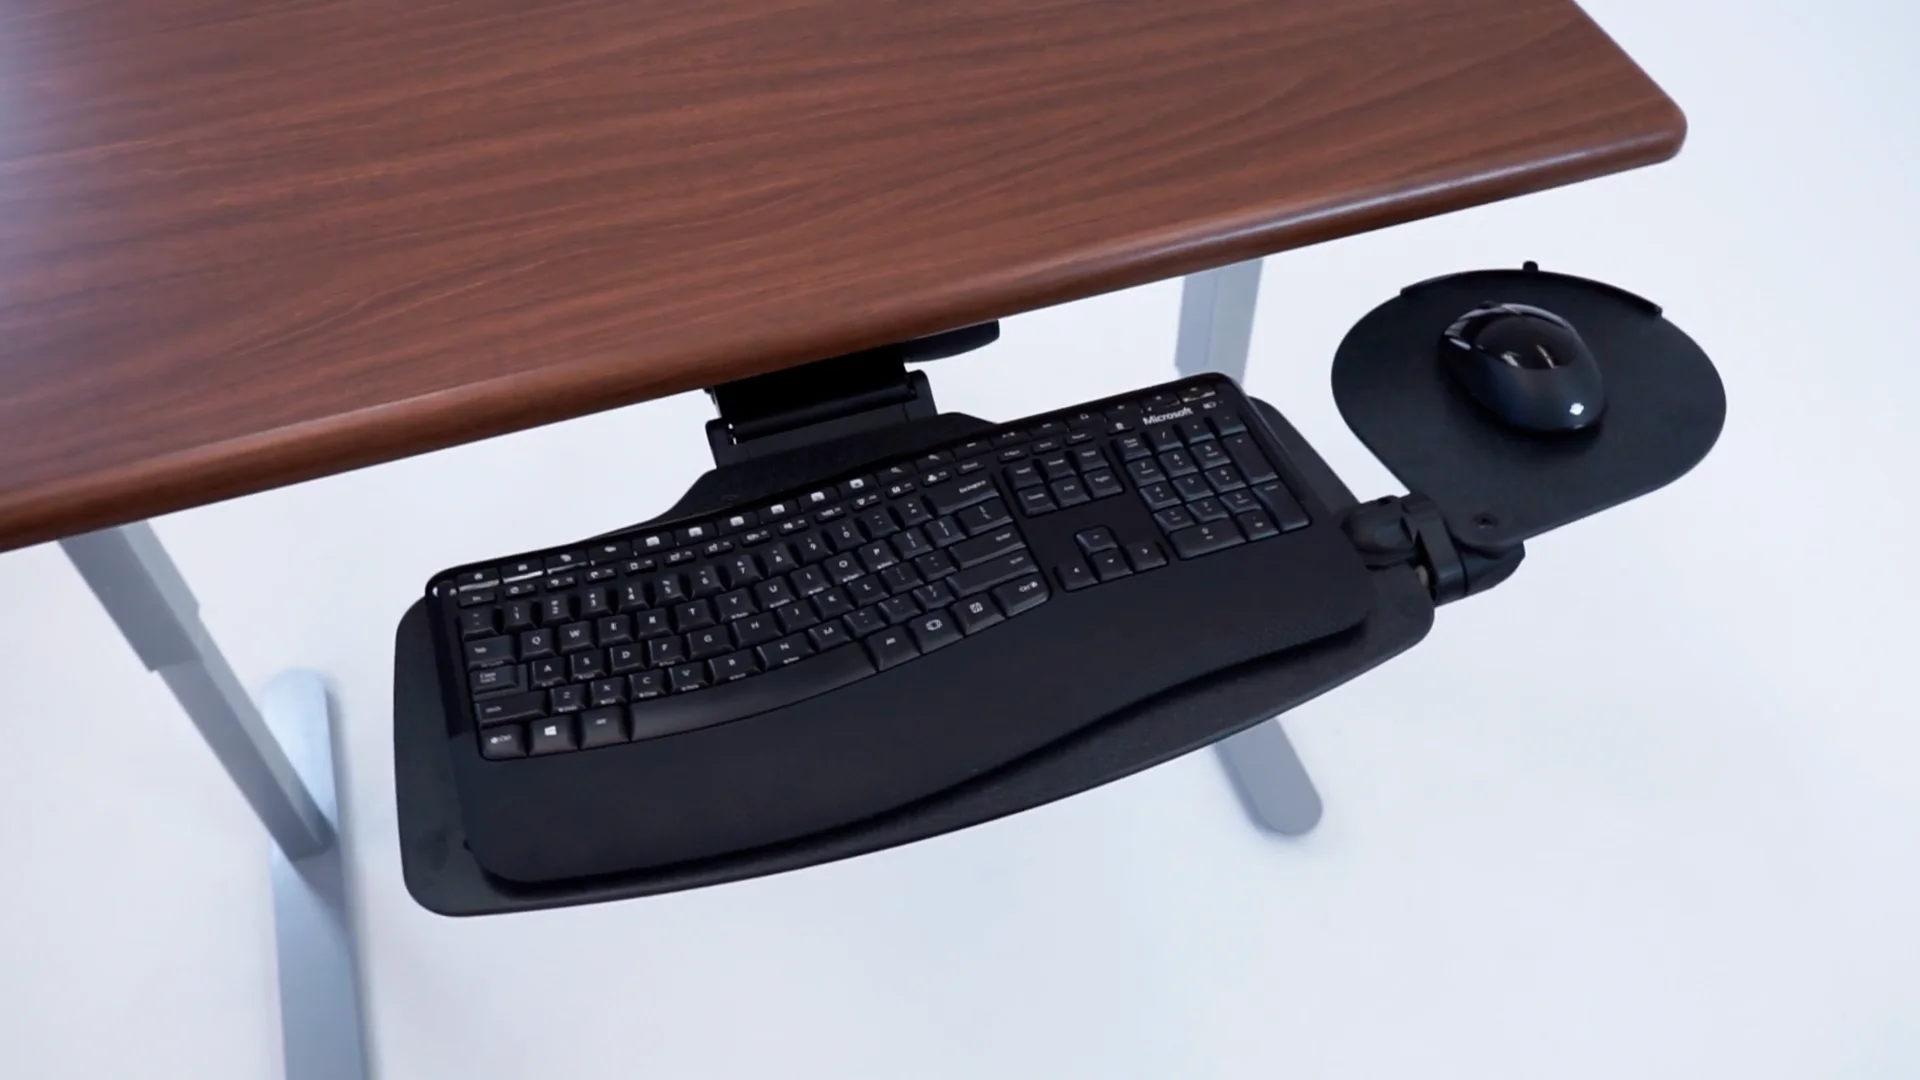 Tucker Advanced Cable Management for Standing Desks